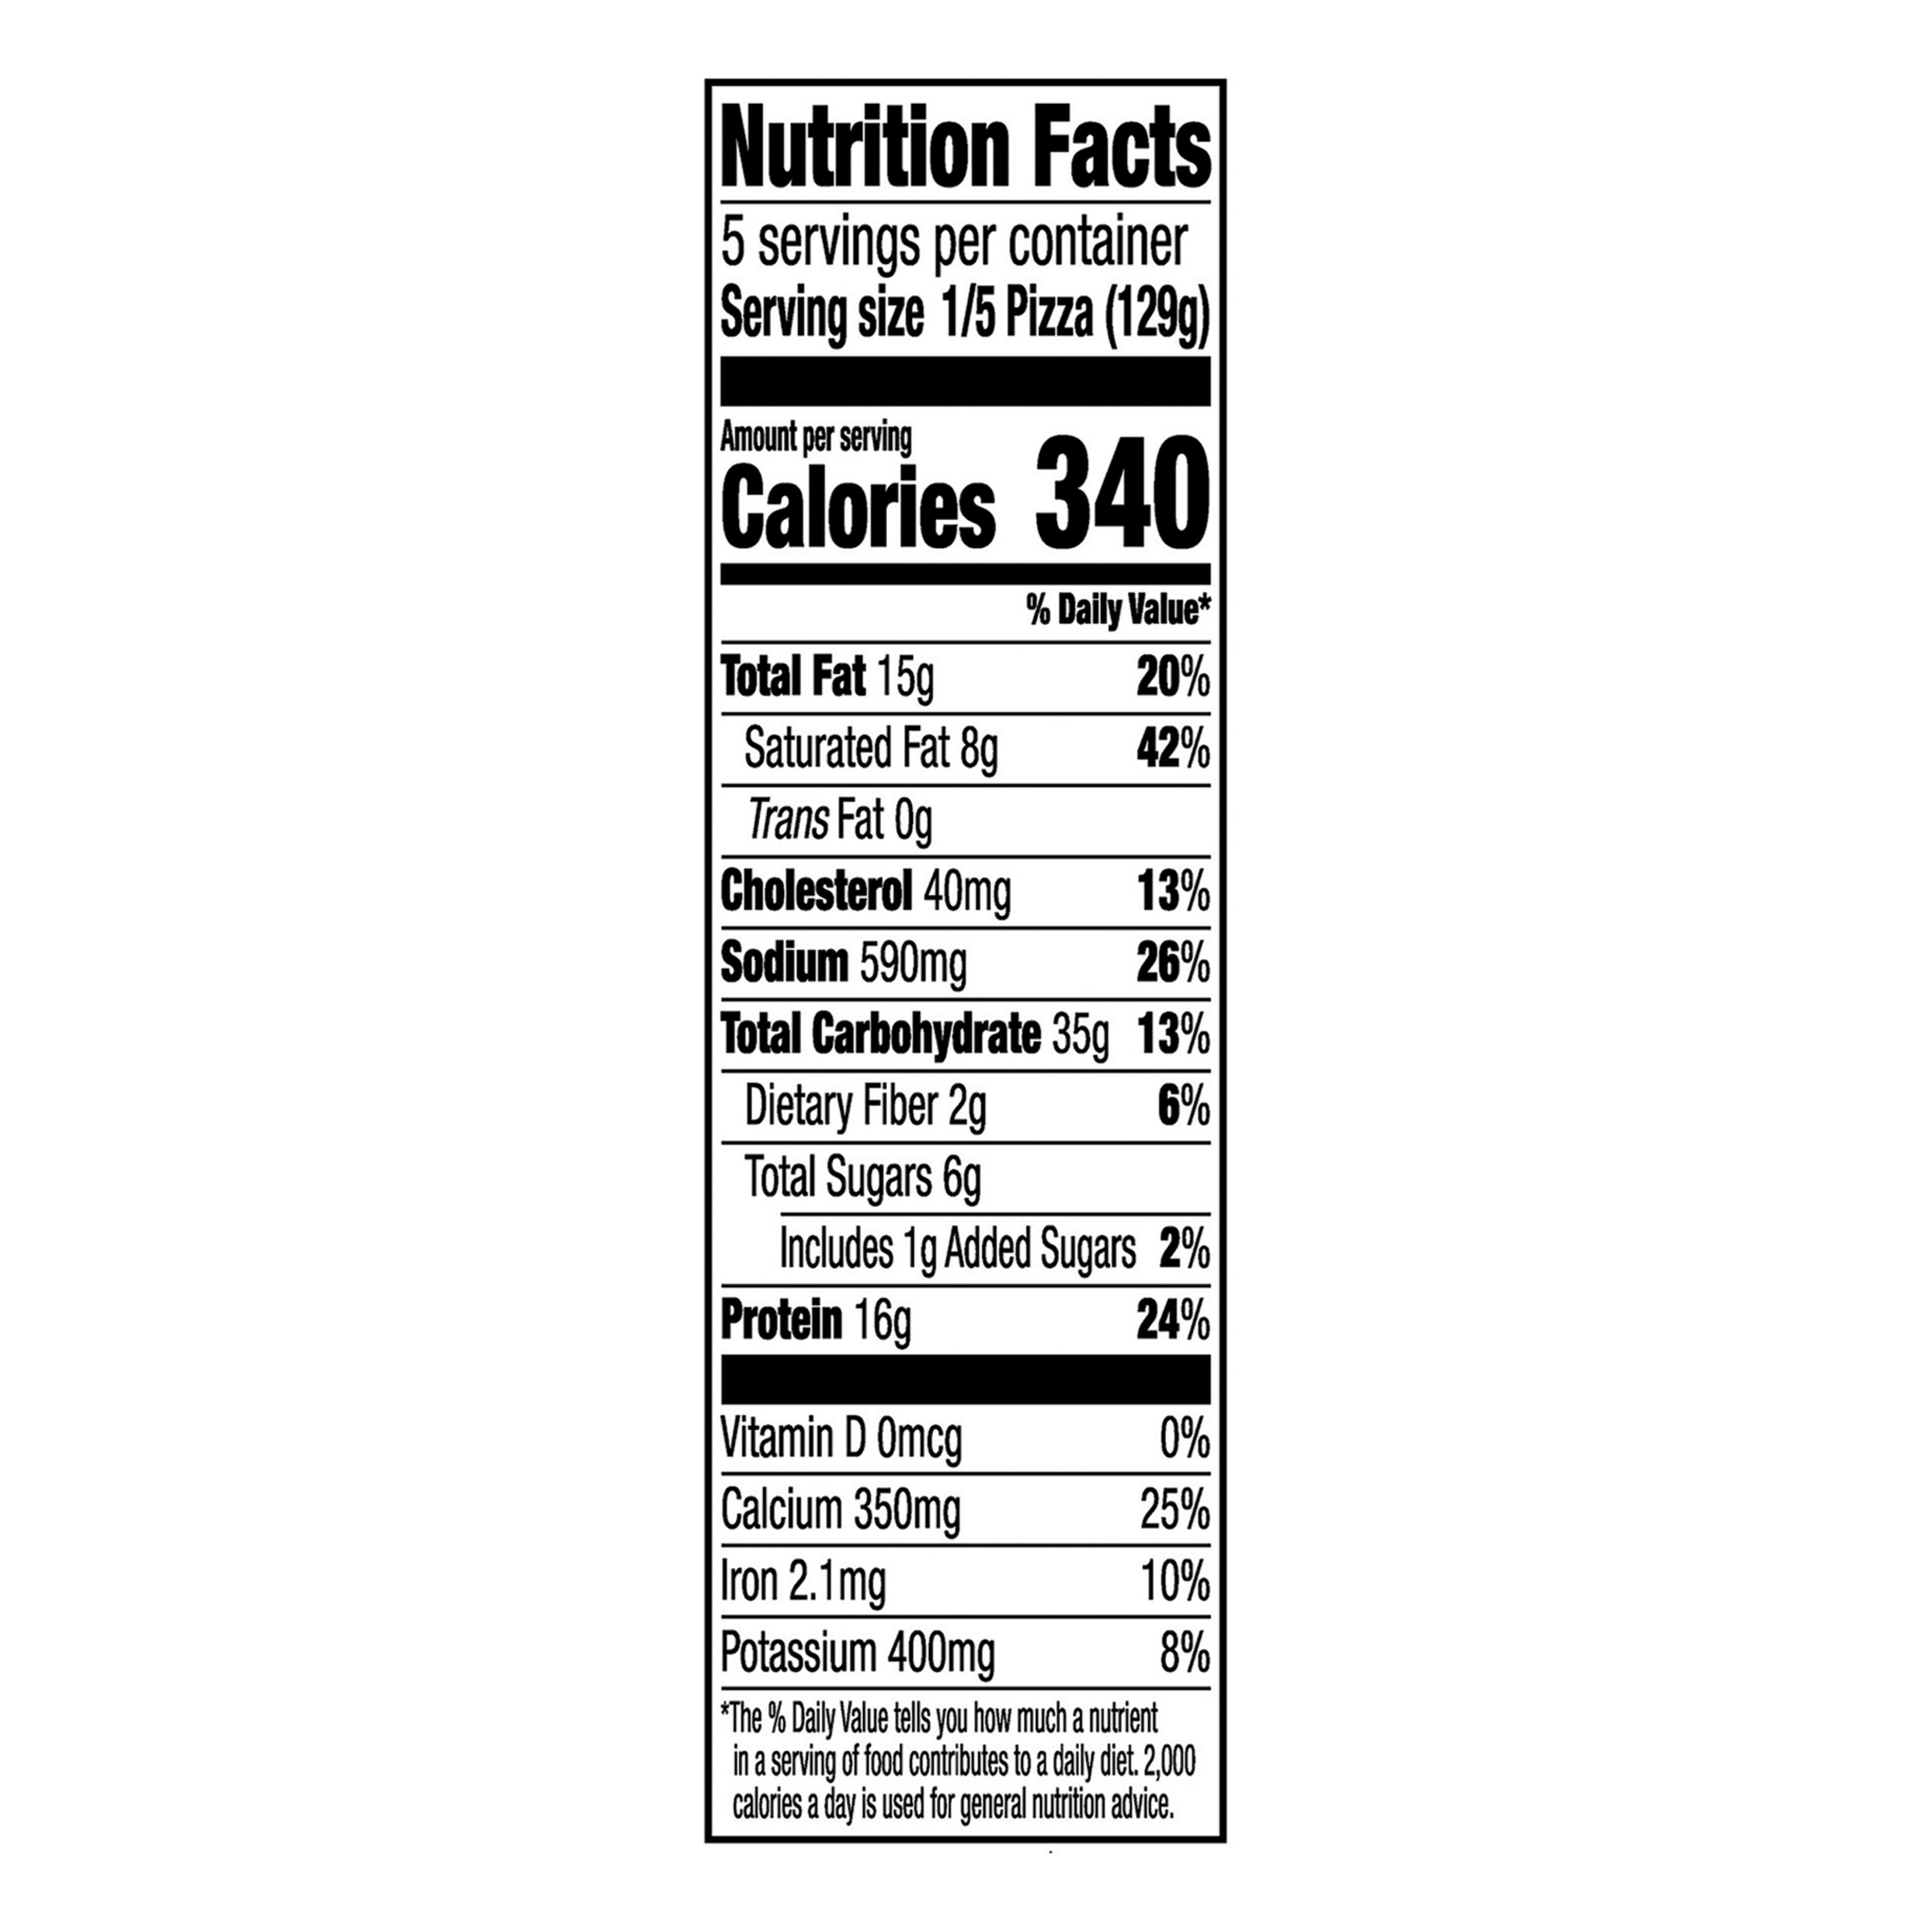 Nutrition Facts Serving Size 1/5 Pizza (129g)
				Servings per container 5
				Calories	 340
				Total Fat 15 g
				% DV 20%
				Saturated Fat 8 g
				% DV 42%
				Trans Fat 0 g
				Cholesterol 40 mg
				% DV 13%
				Sodium	590 mg
				% DV 26%
				Total Carbohydrate 35 g
				% DV 13%
				Dietary Fiber 2 g
				% DV 6%
				Total Sugars 6 g
				Added Sugars 1 g
				% DV 2%
				Protein	16 g
				% DV 24%
				Vitamin D 0 MCG
				% DV 0%
				Calcium	350 mg
				% DV 25%
				Iron 2.1 mg
				% DV 10%
				Potassium 400 mg
				% DV 8%